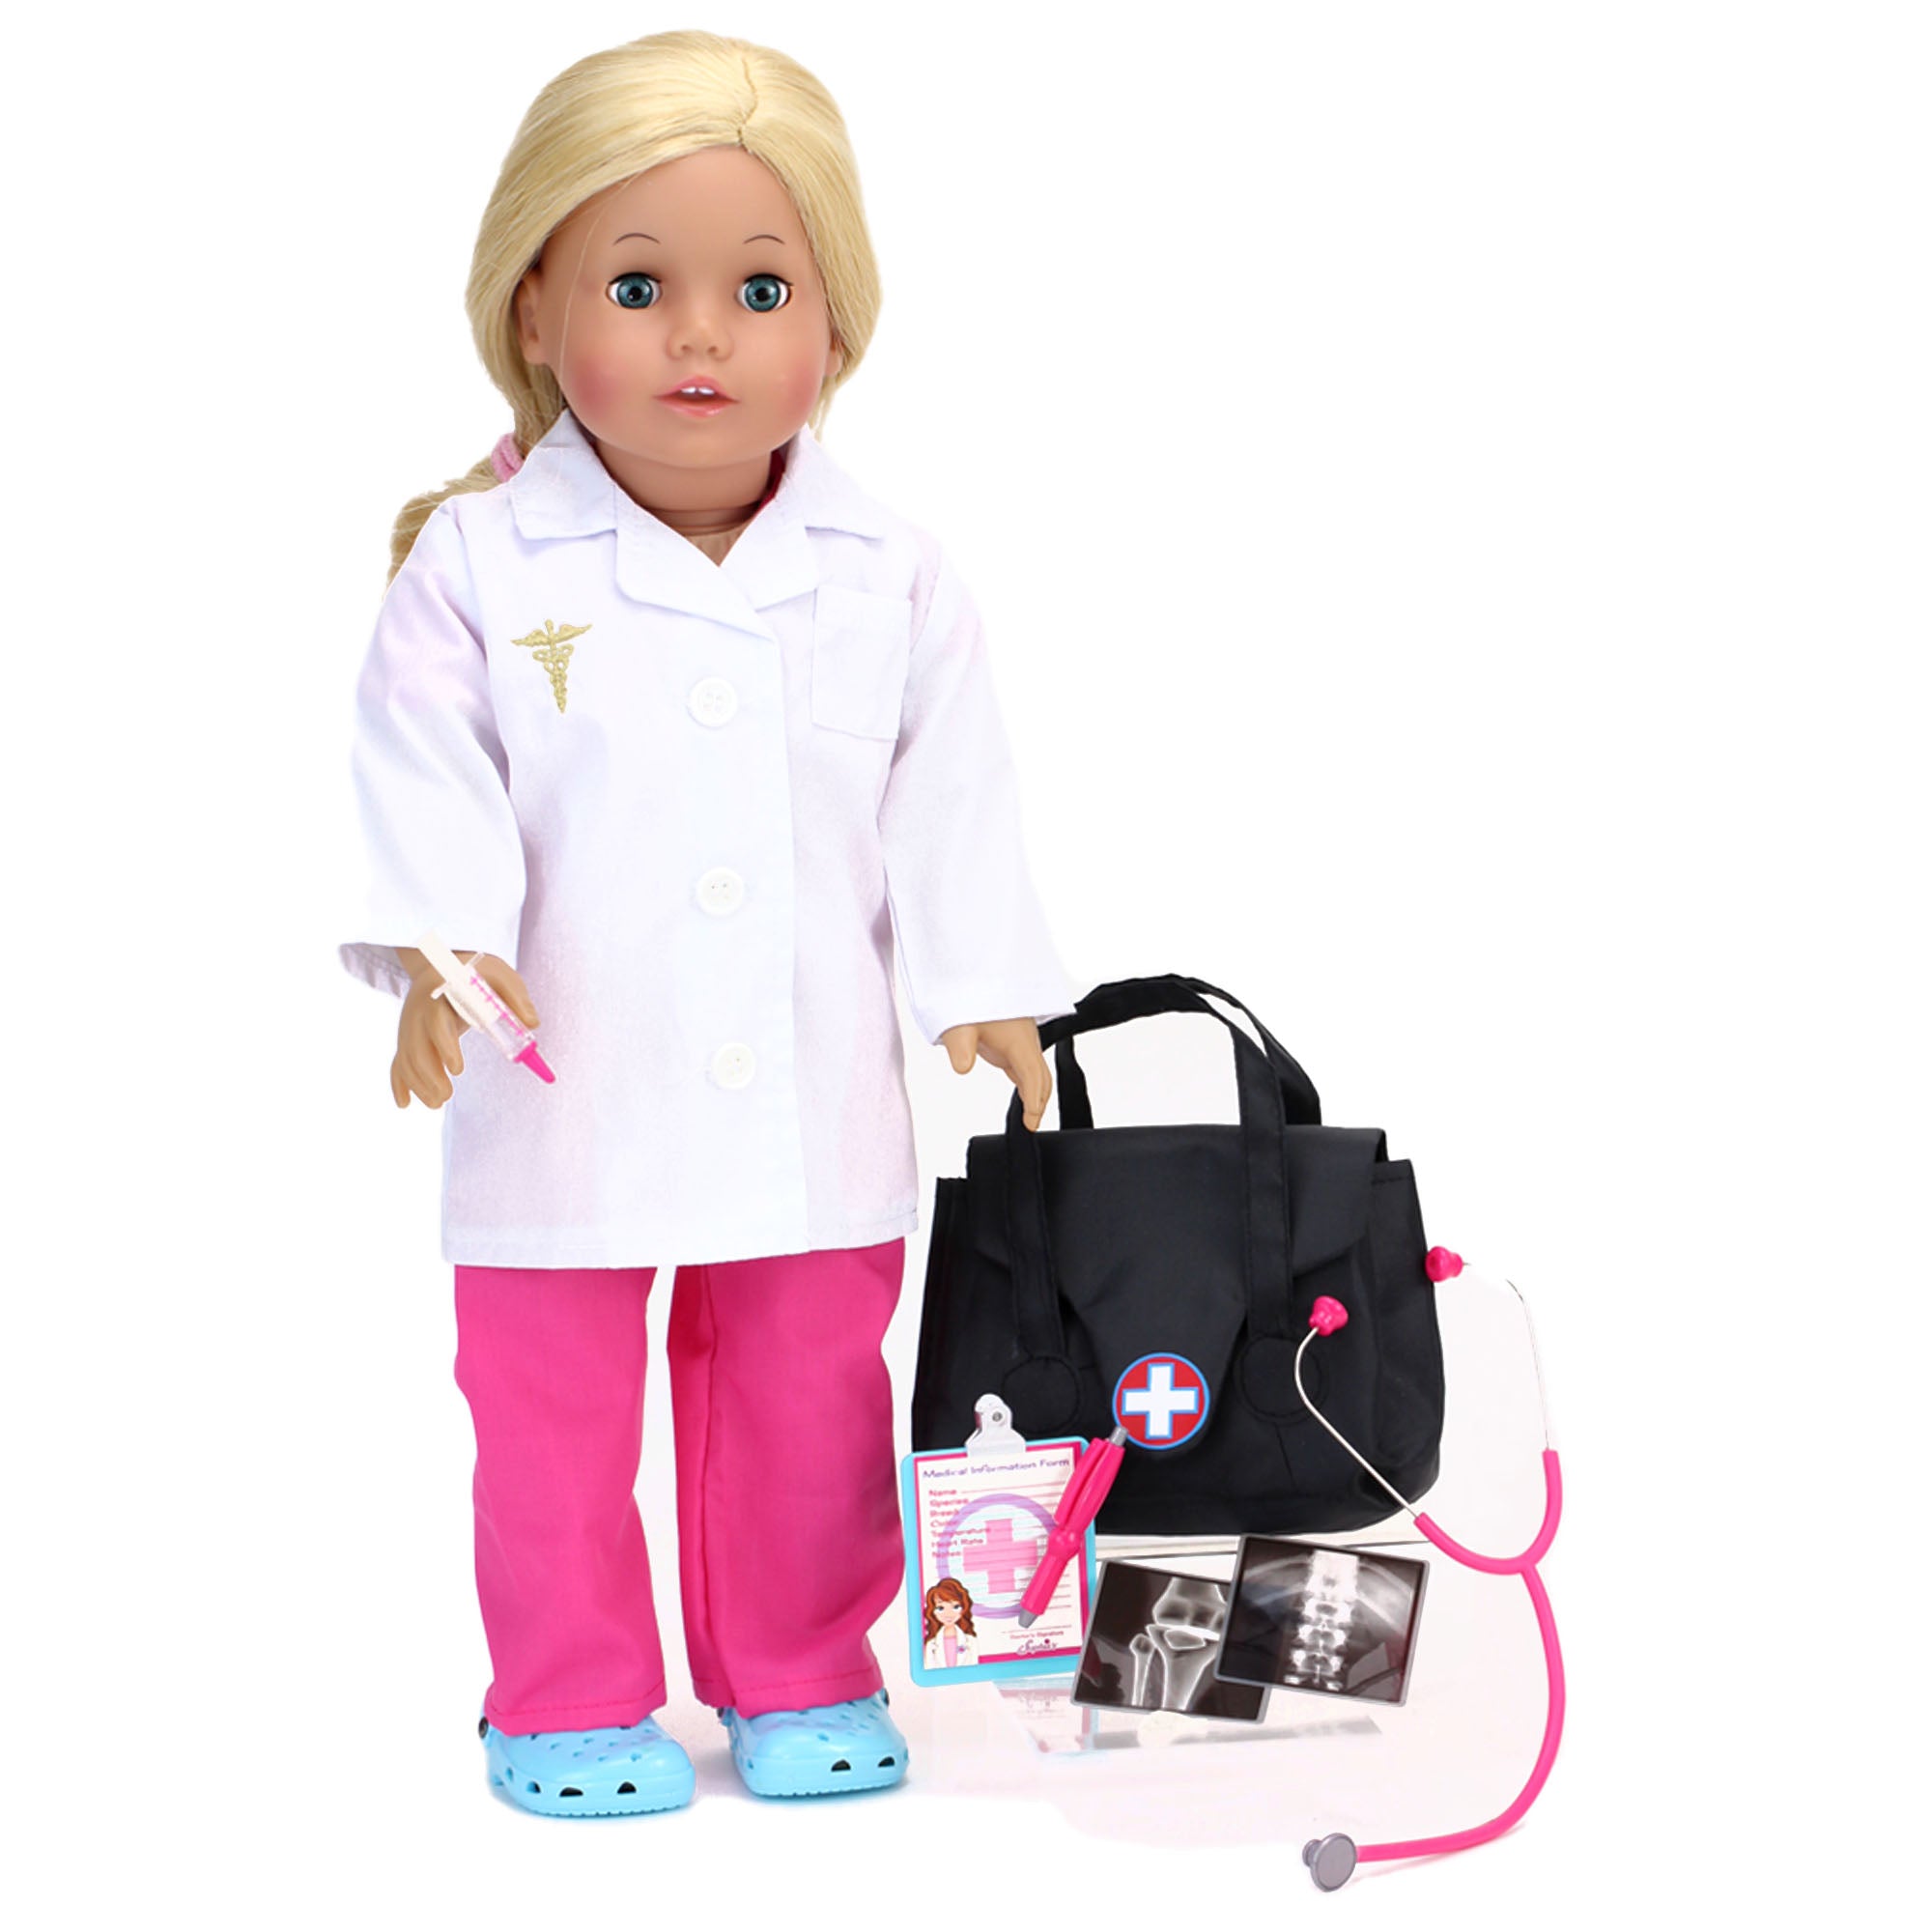 Sophia's Medical Bag and Doctor Accessories Set for 18'' Dolls, Black